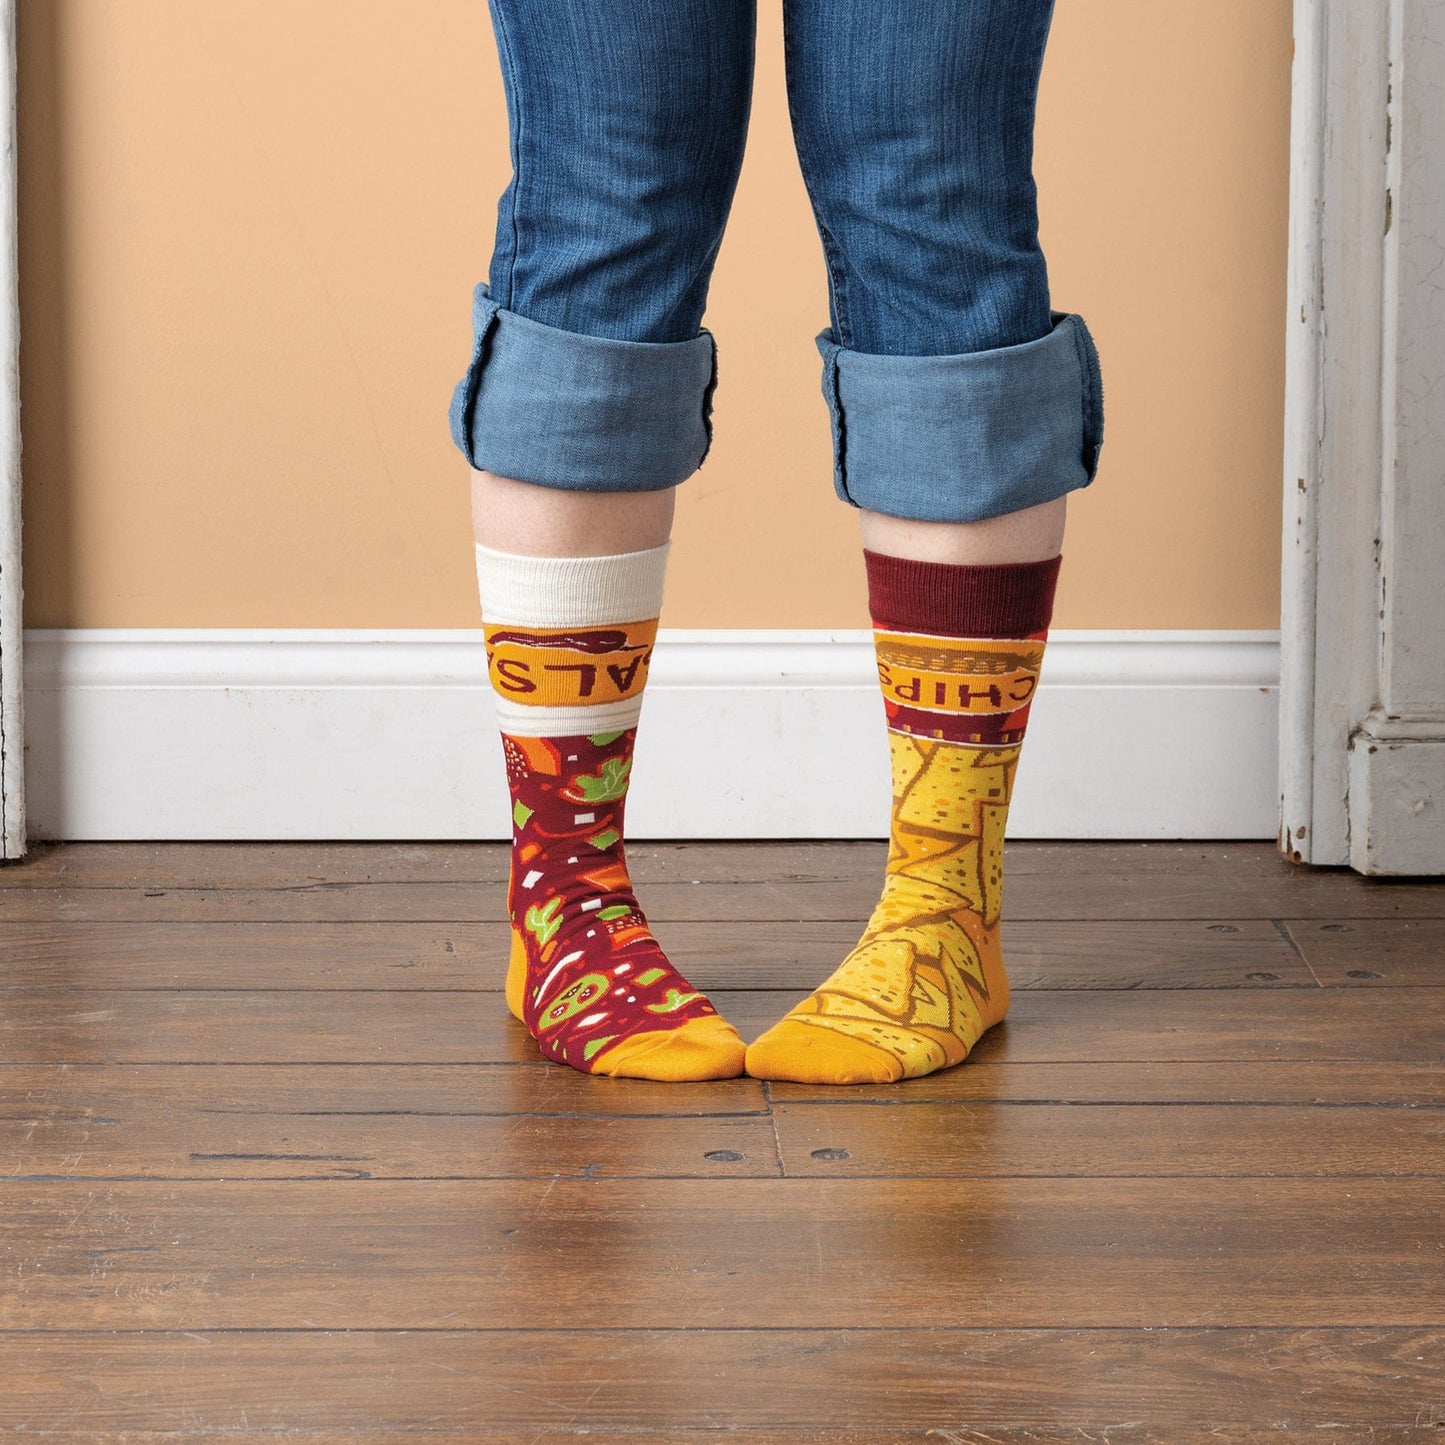 Socks One Size Fits Most Socks - Chips & Salsa PBK-108531